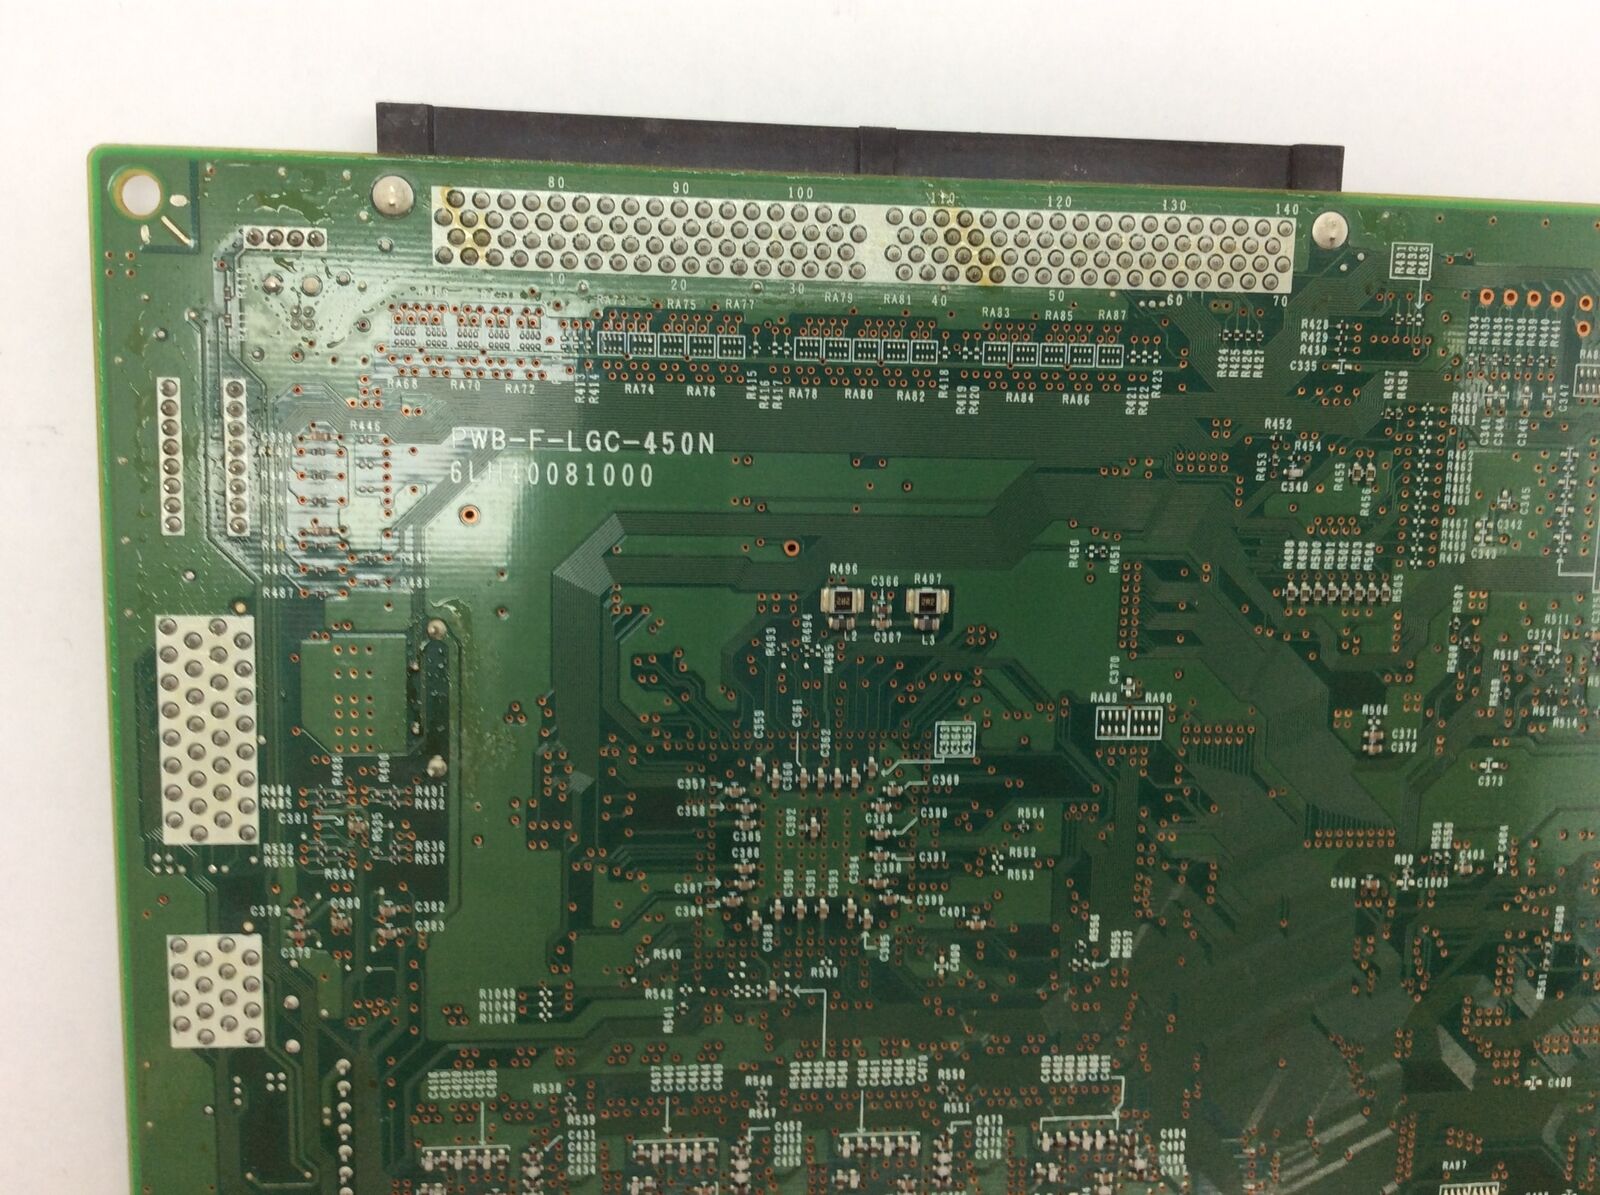 Toshiba 2330c Estudio Printer Pwb-f-lgc-450n 6lh40081000 Circuit Board